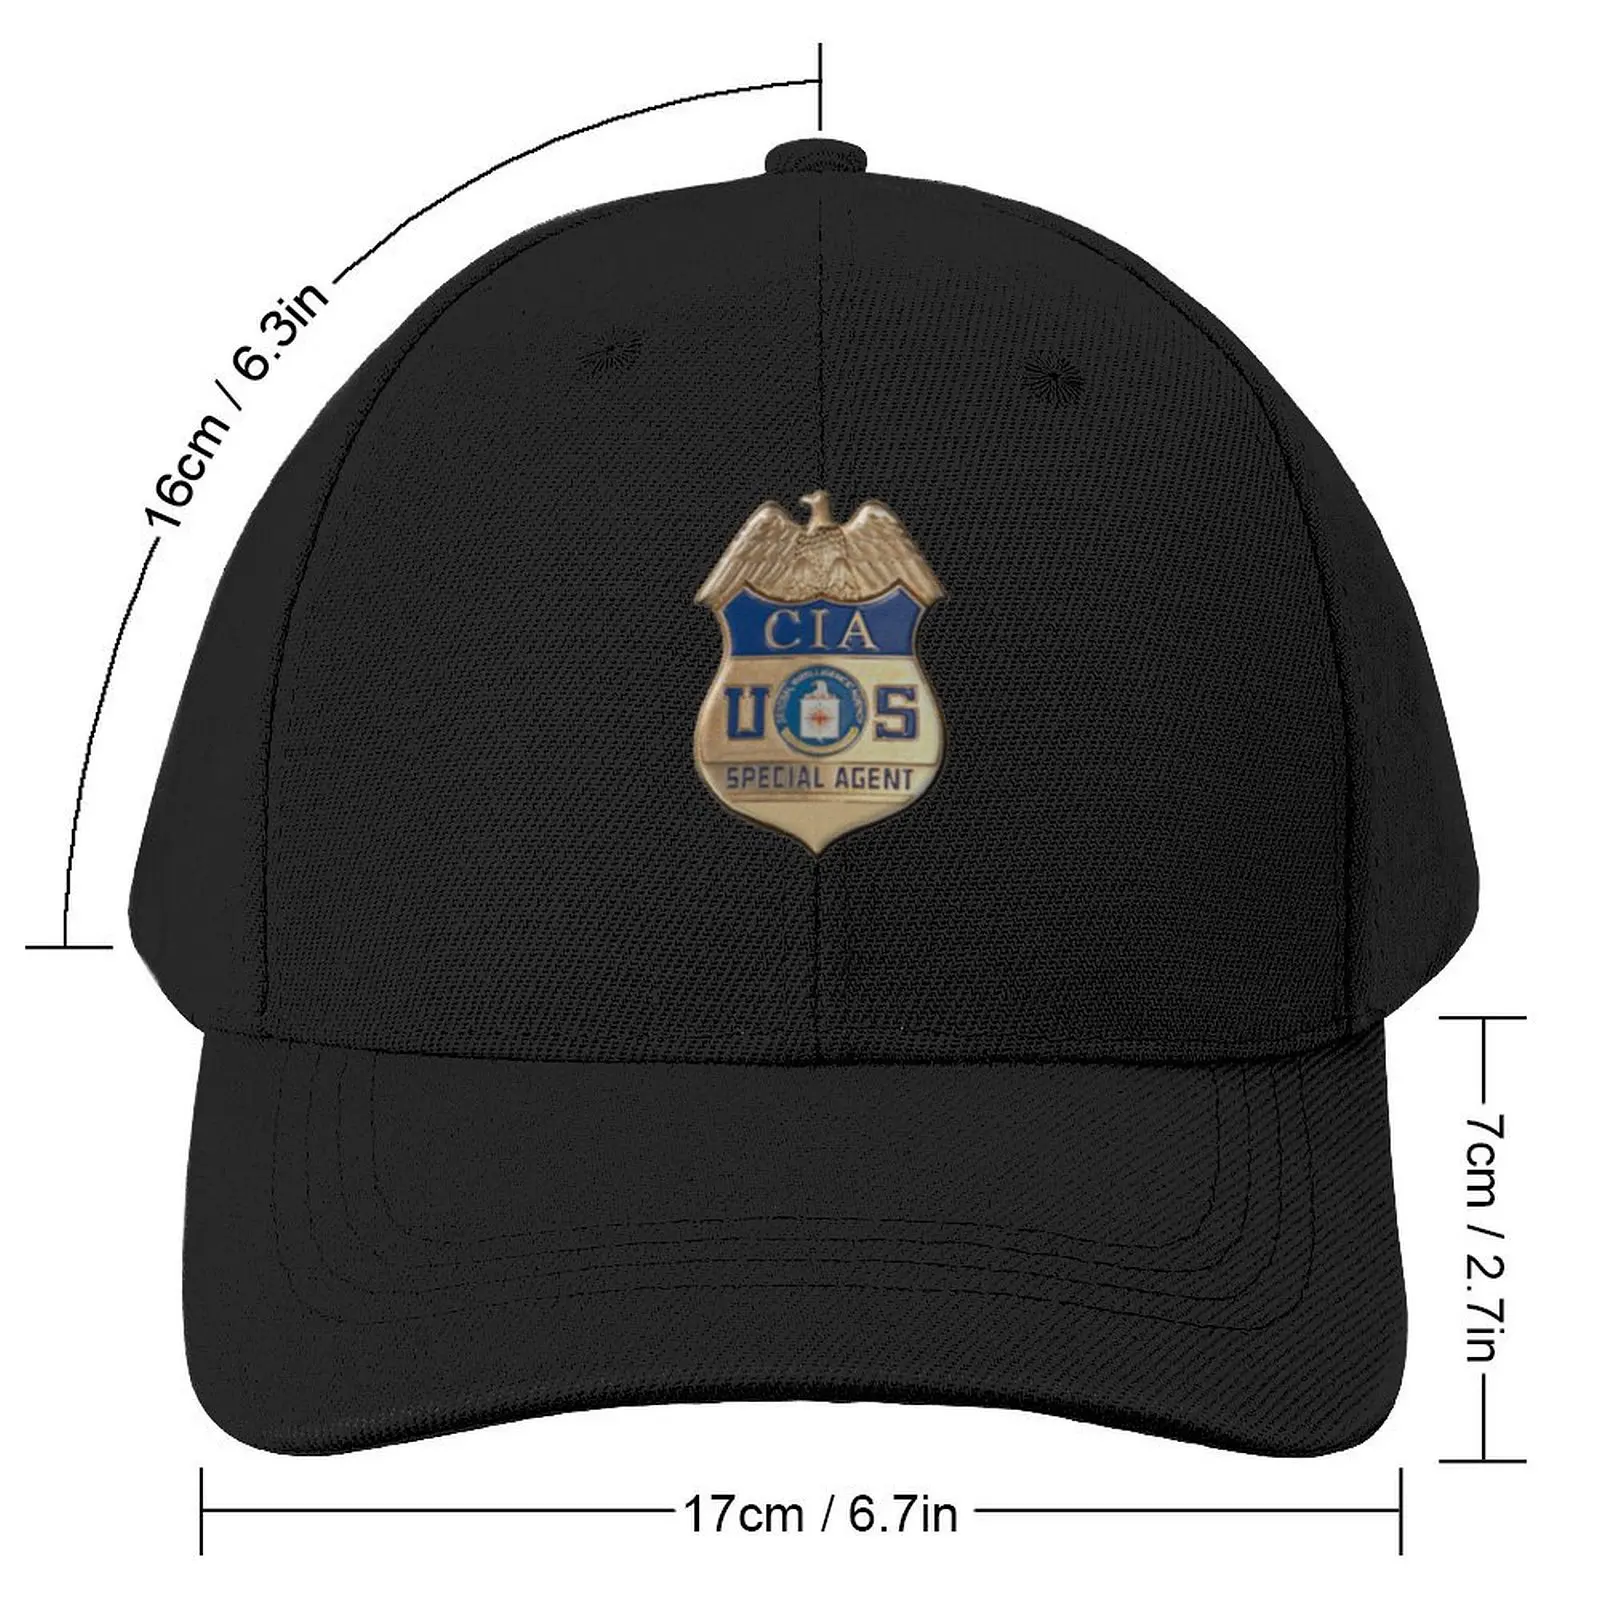 Homens e mulheres UV Protection Baseball Cap, Trucker Hat, agente especial, Solar, Golf, Homem, Mulheres